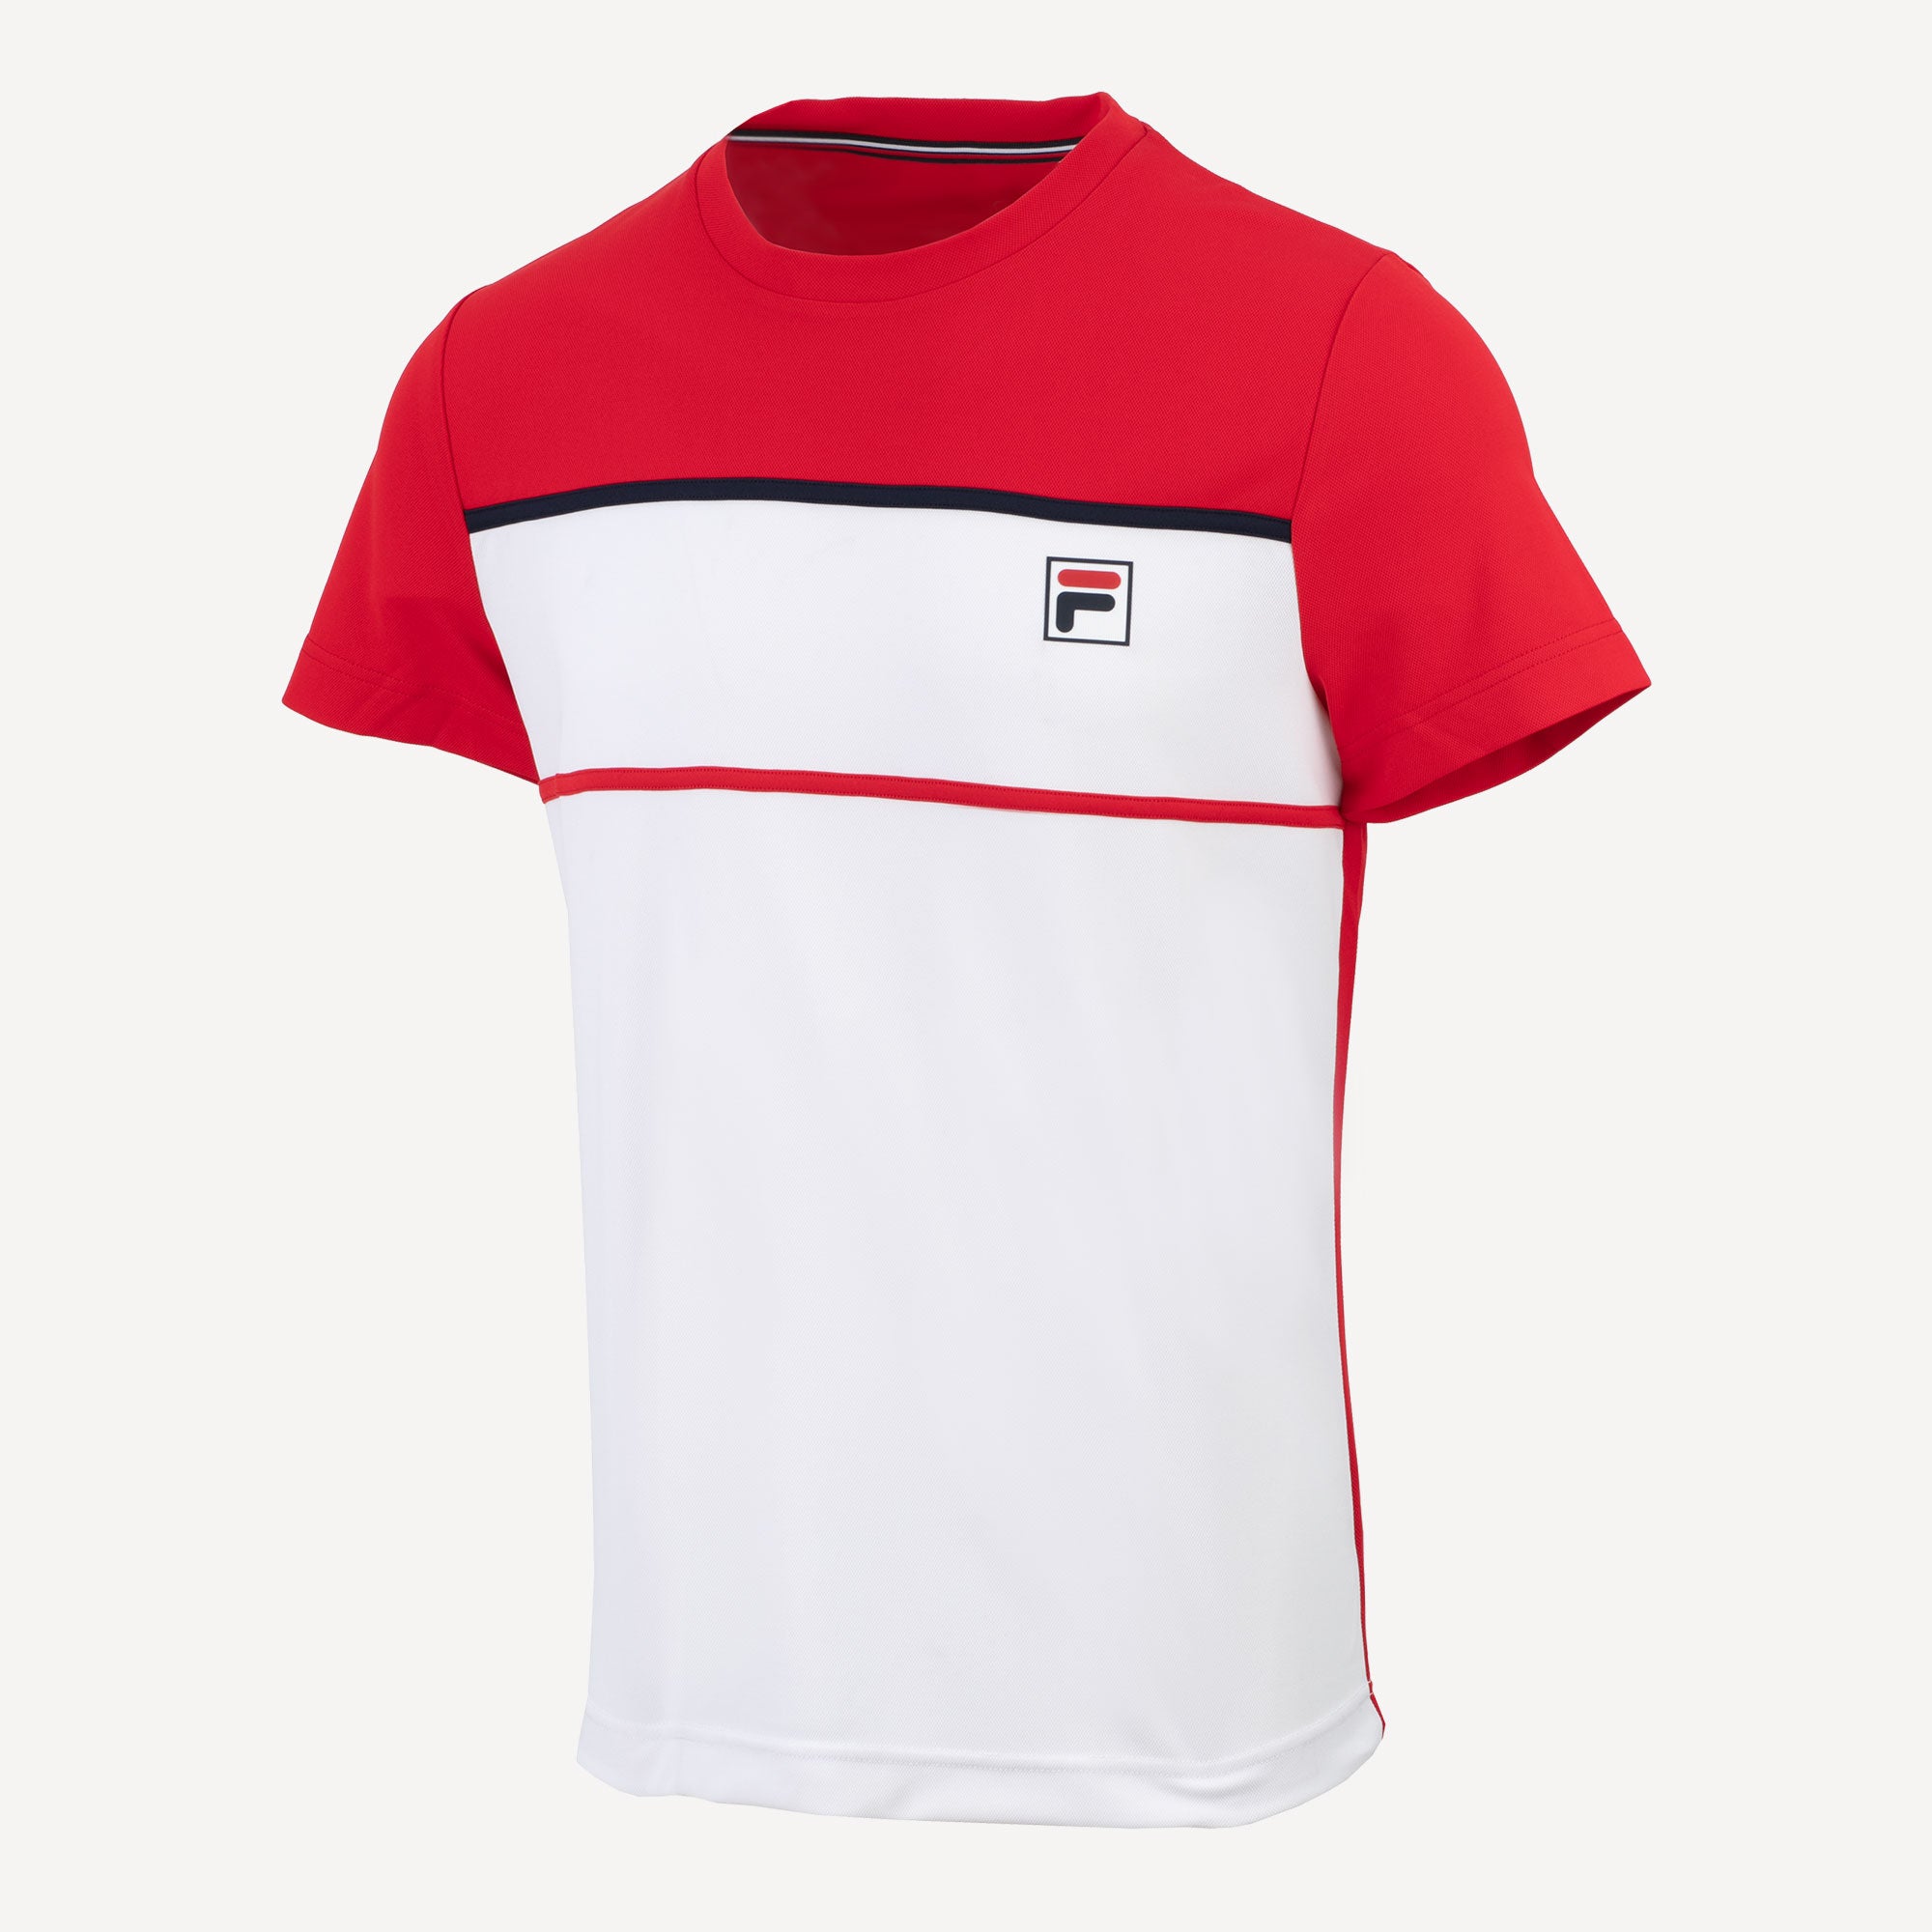 Fila Steve Men's Tennis Shirt Red (1)